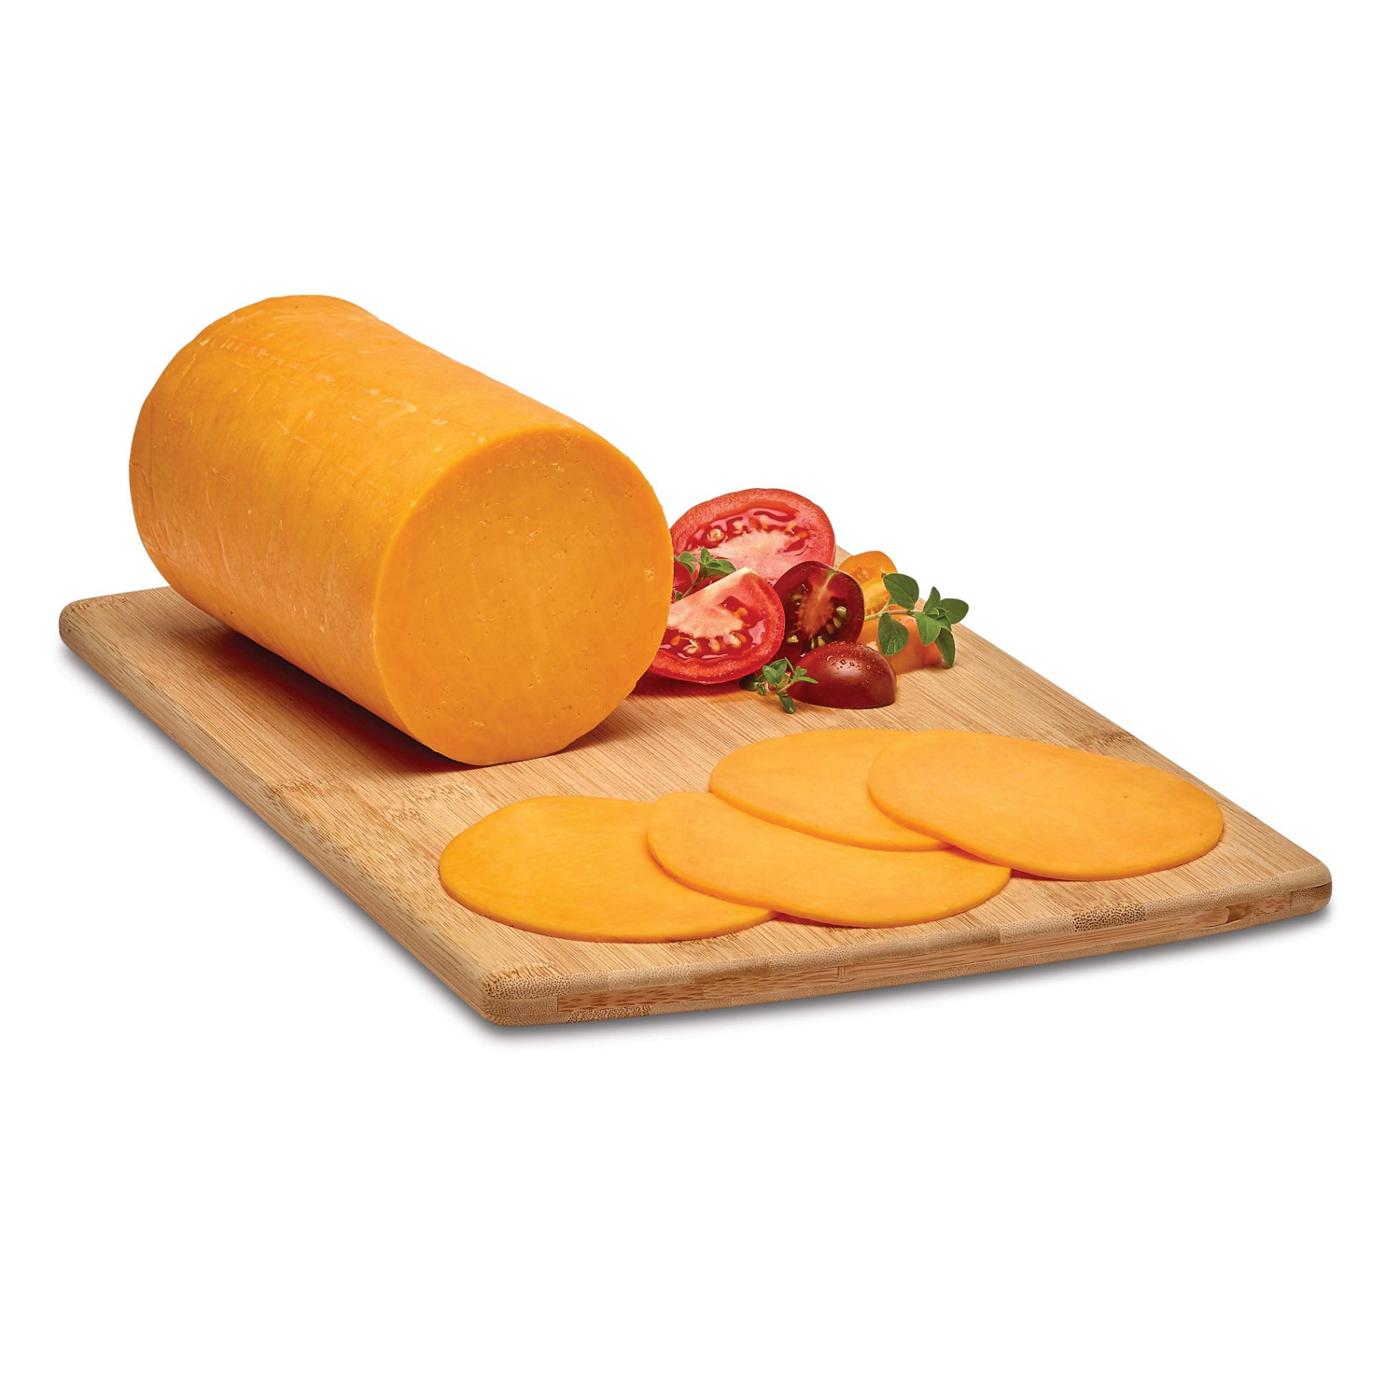 H-E-B Deli Colby Cheese, Custom Sliced; image 1 of 3